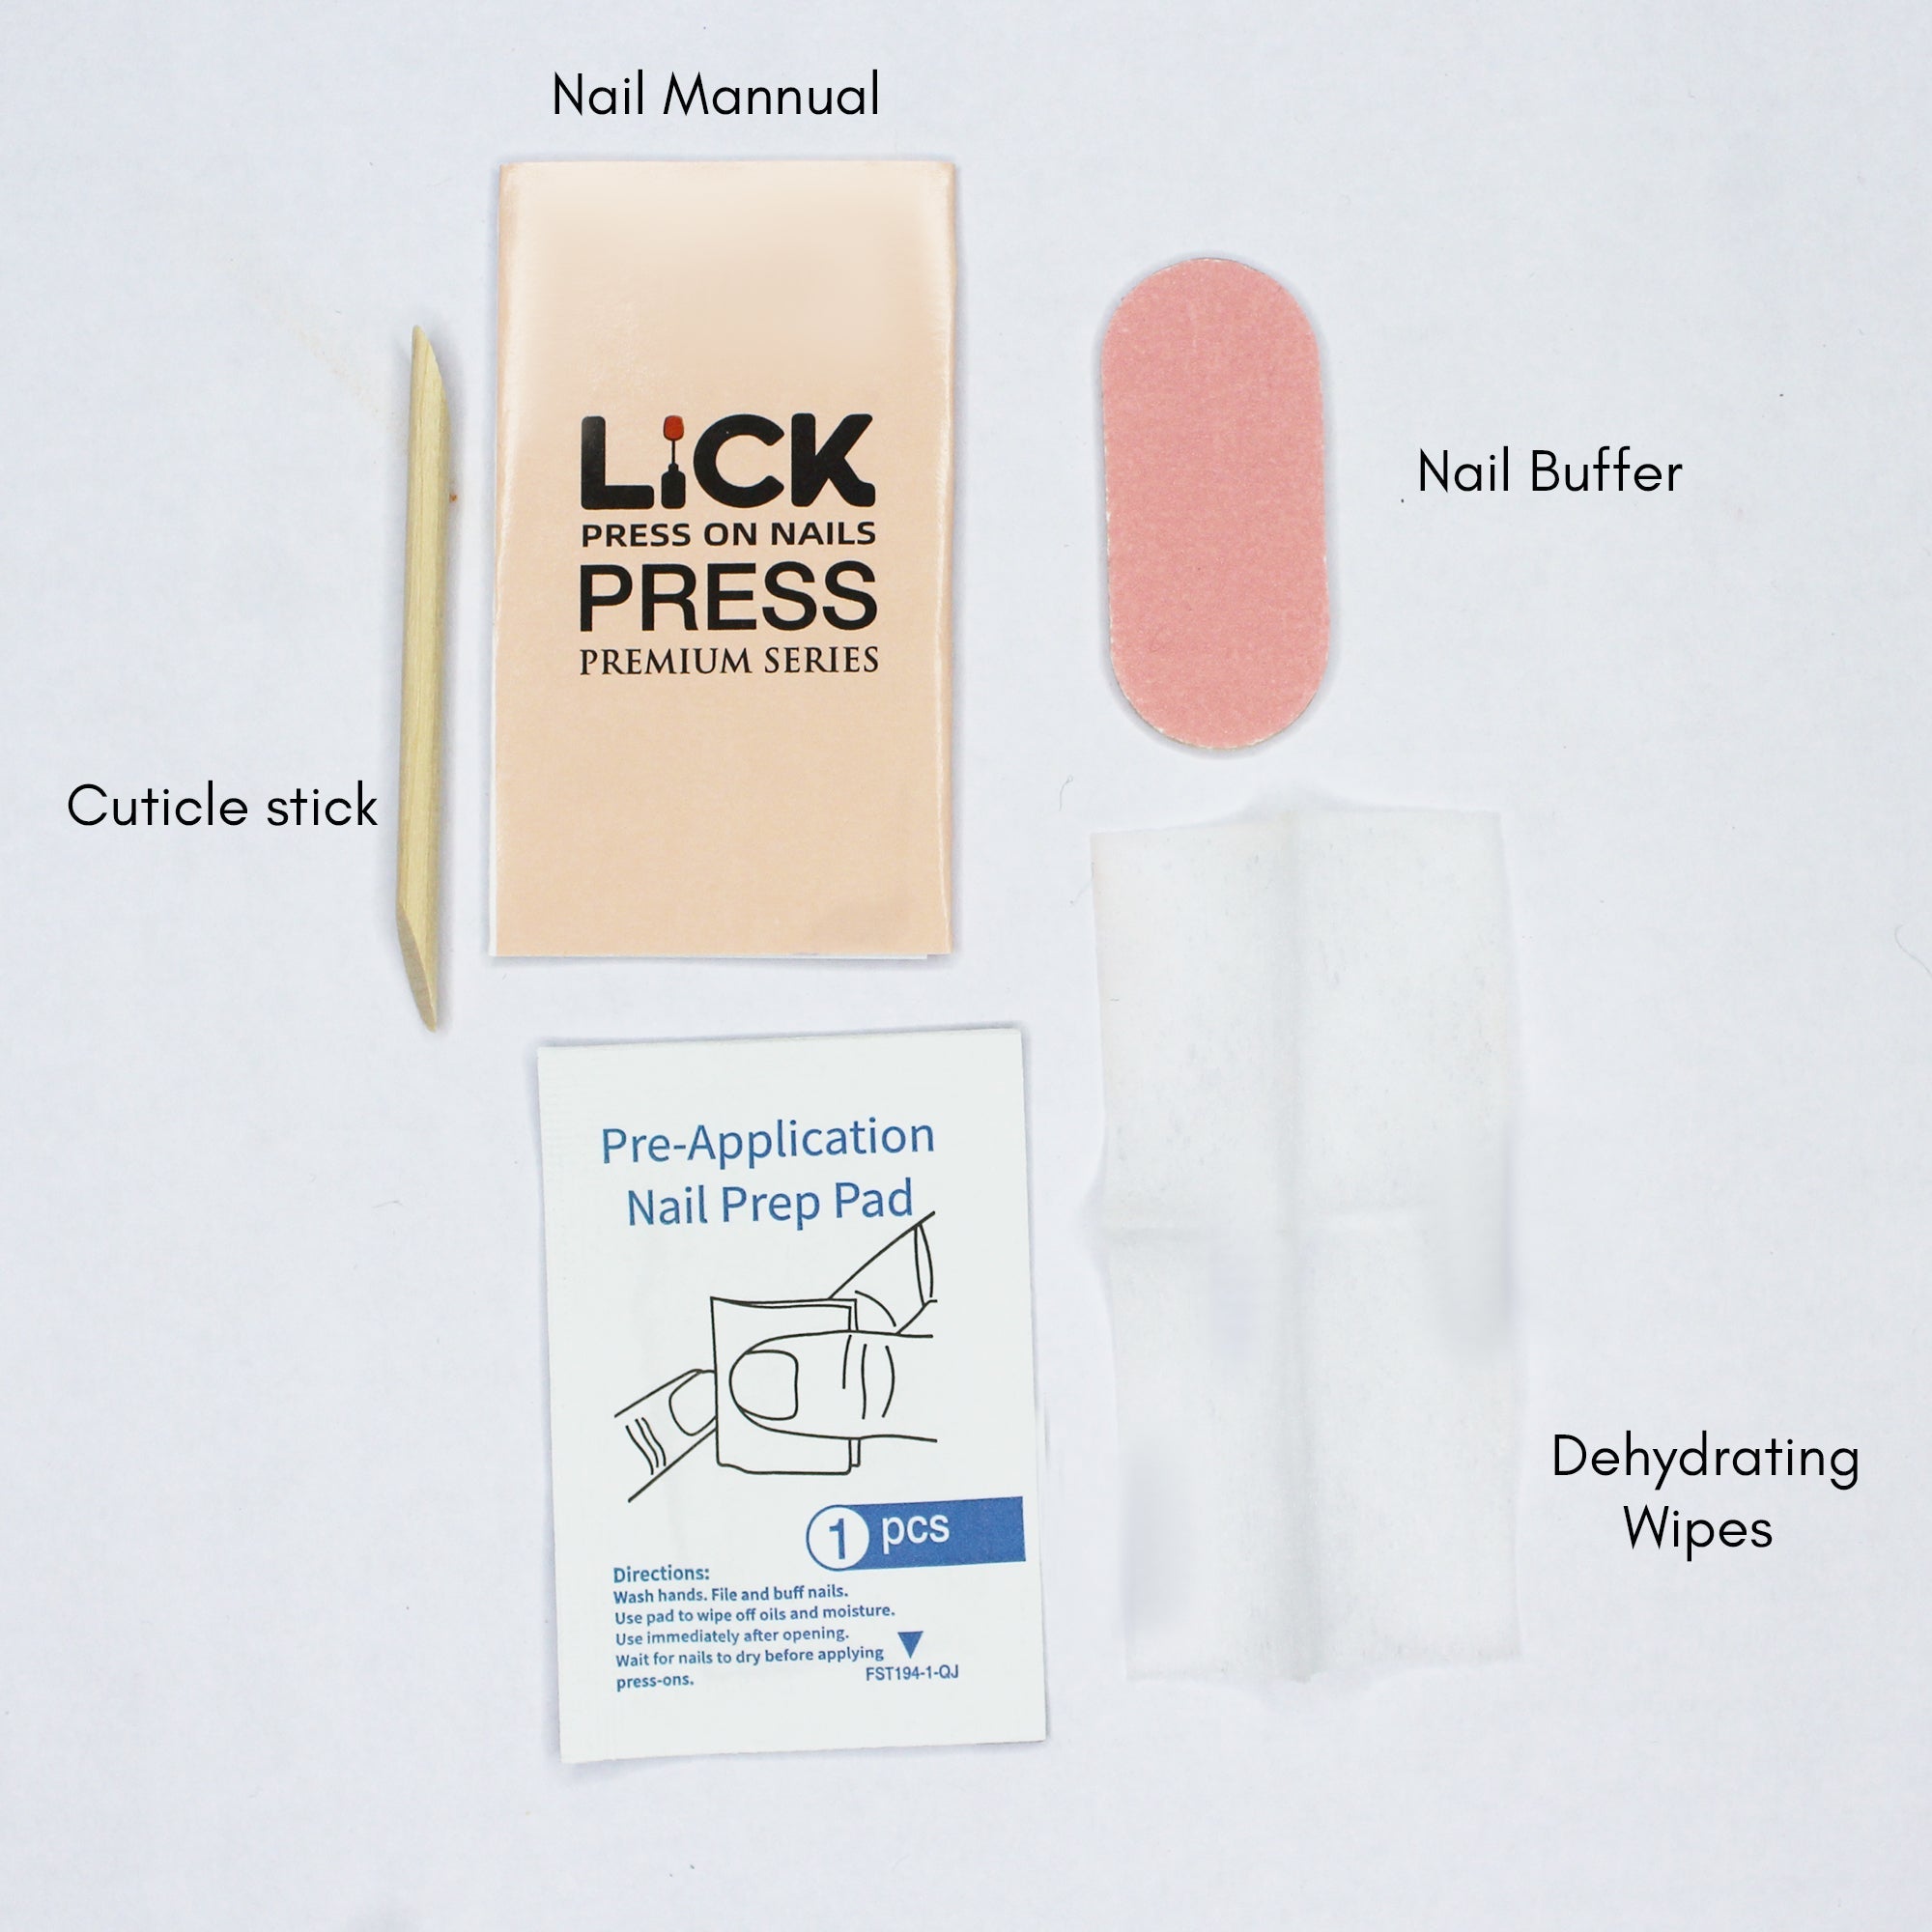 Lick Nail Glossy Finish French Tips Square Shape Press On Nails Pack Of 24 Pcs